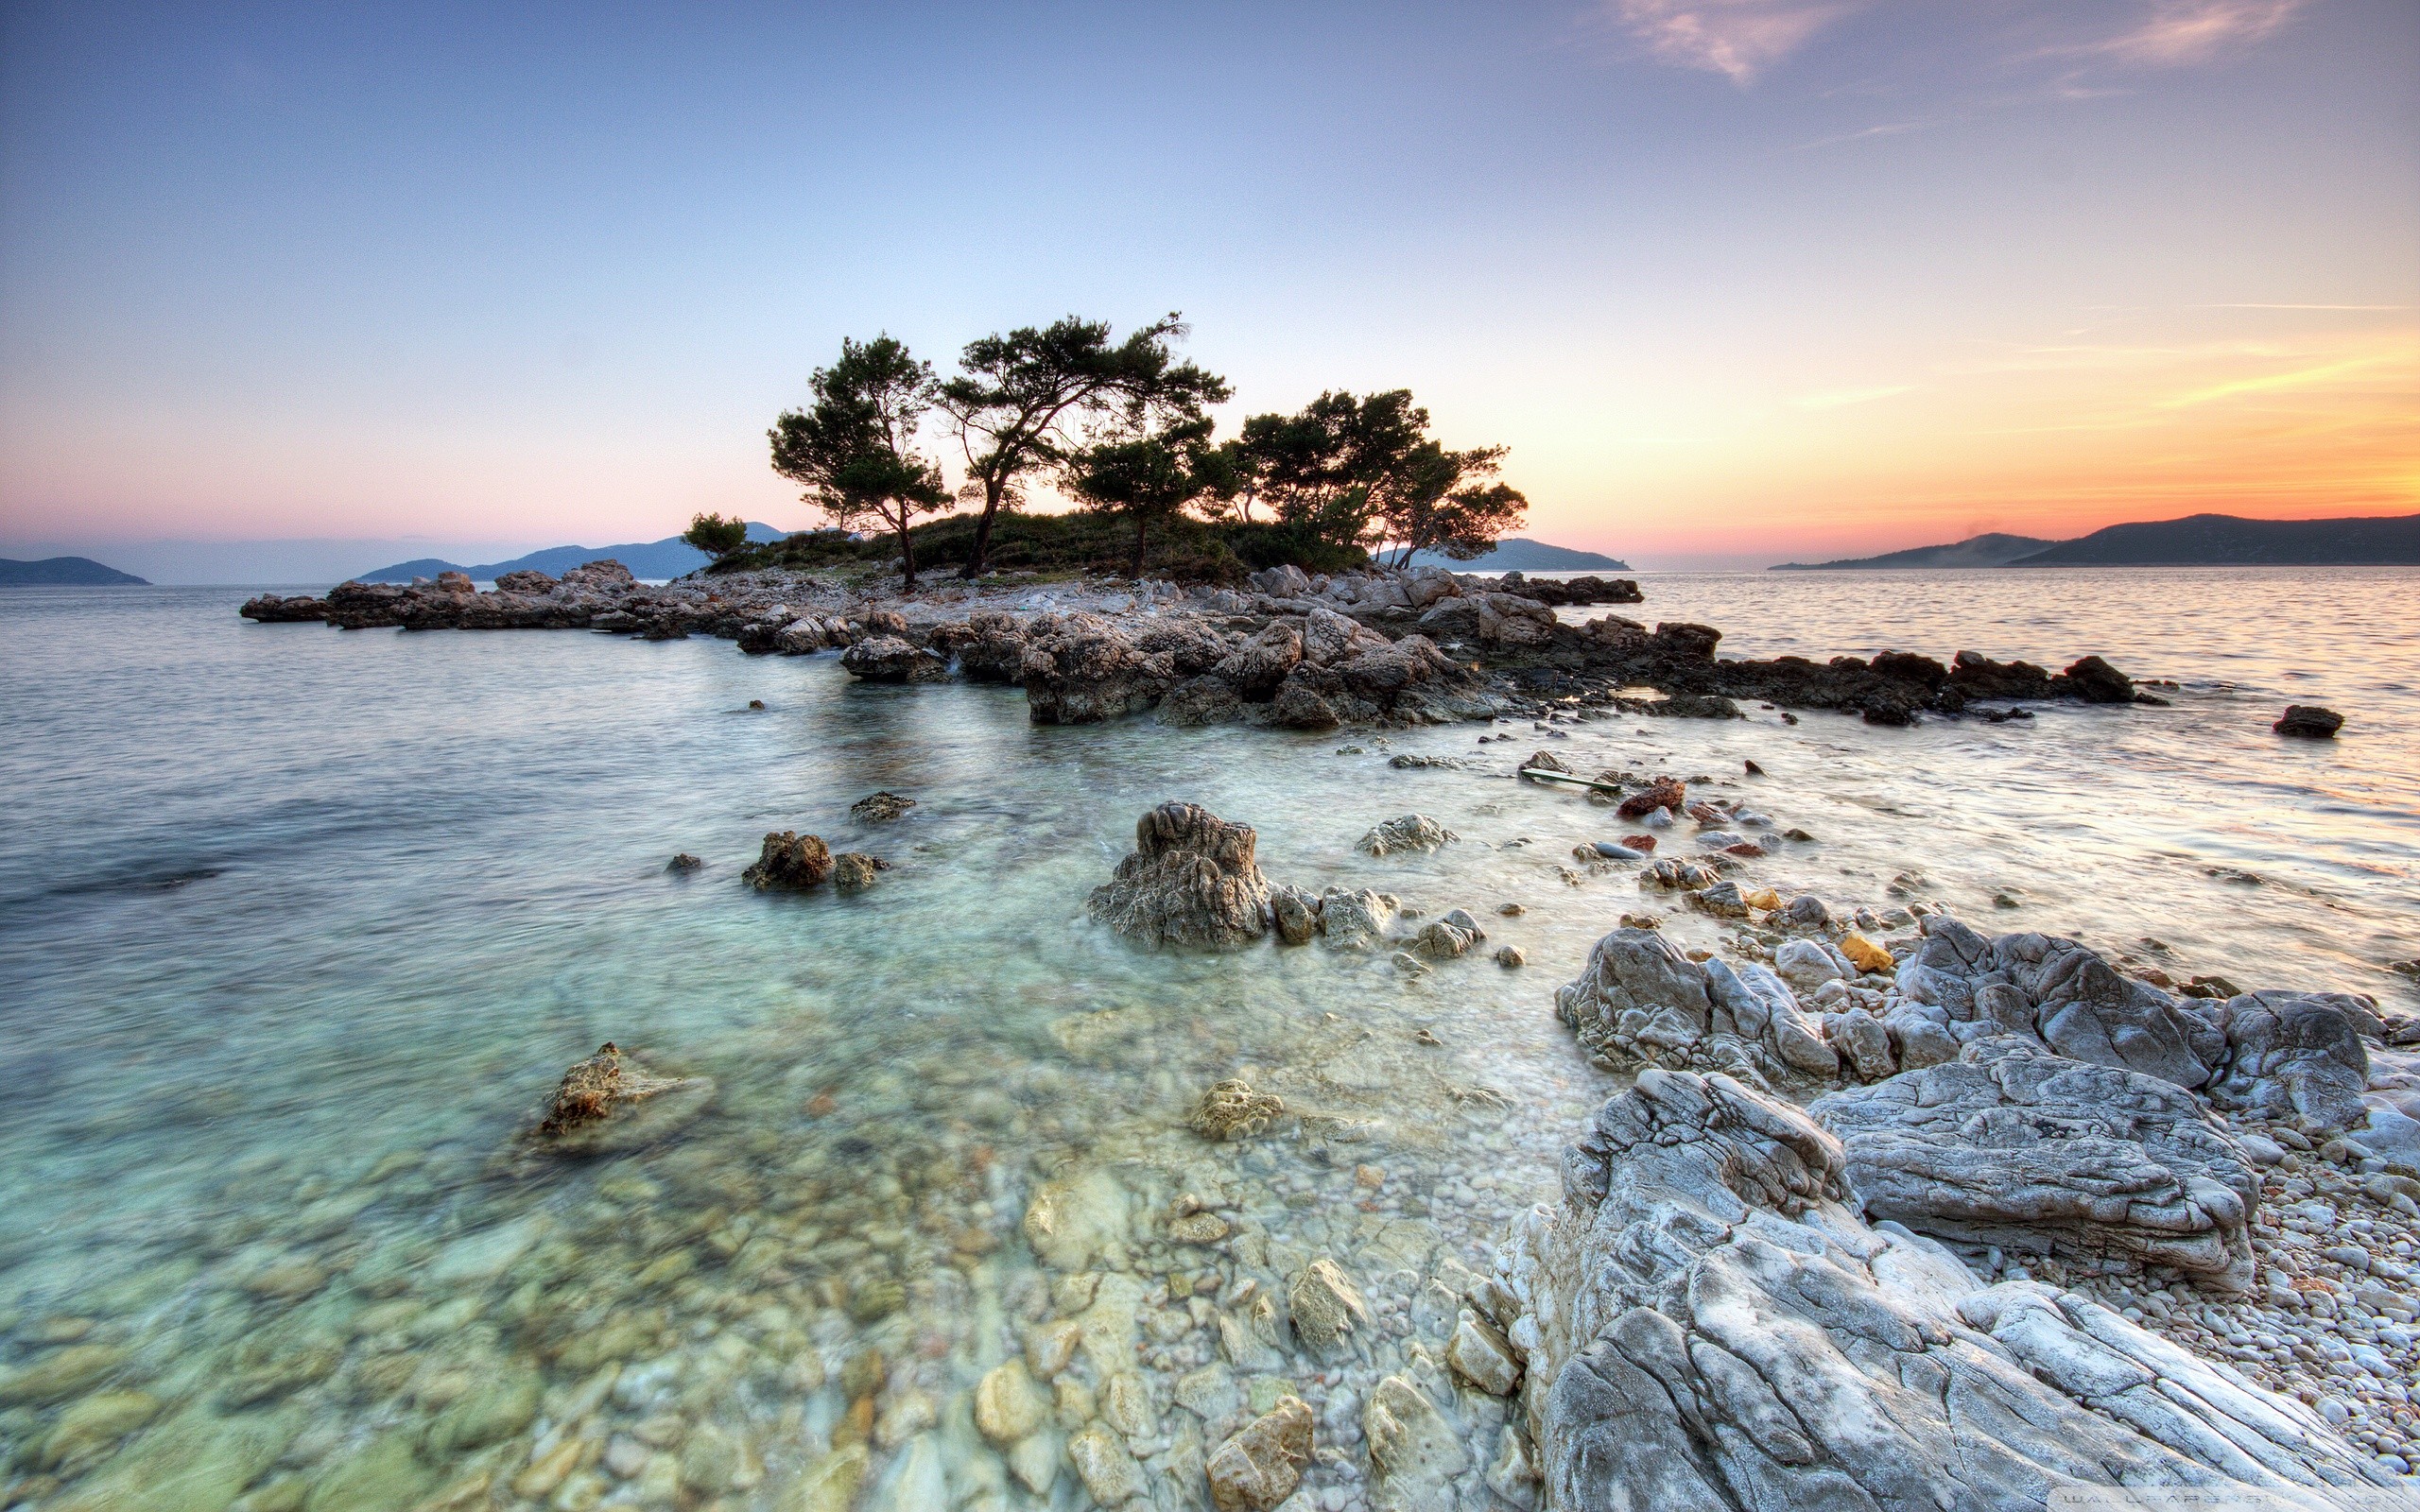 General 2560x1600 water landscape nature sky sunlight Croatia island sunset